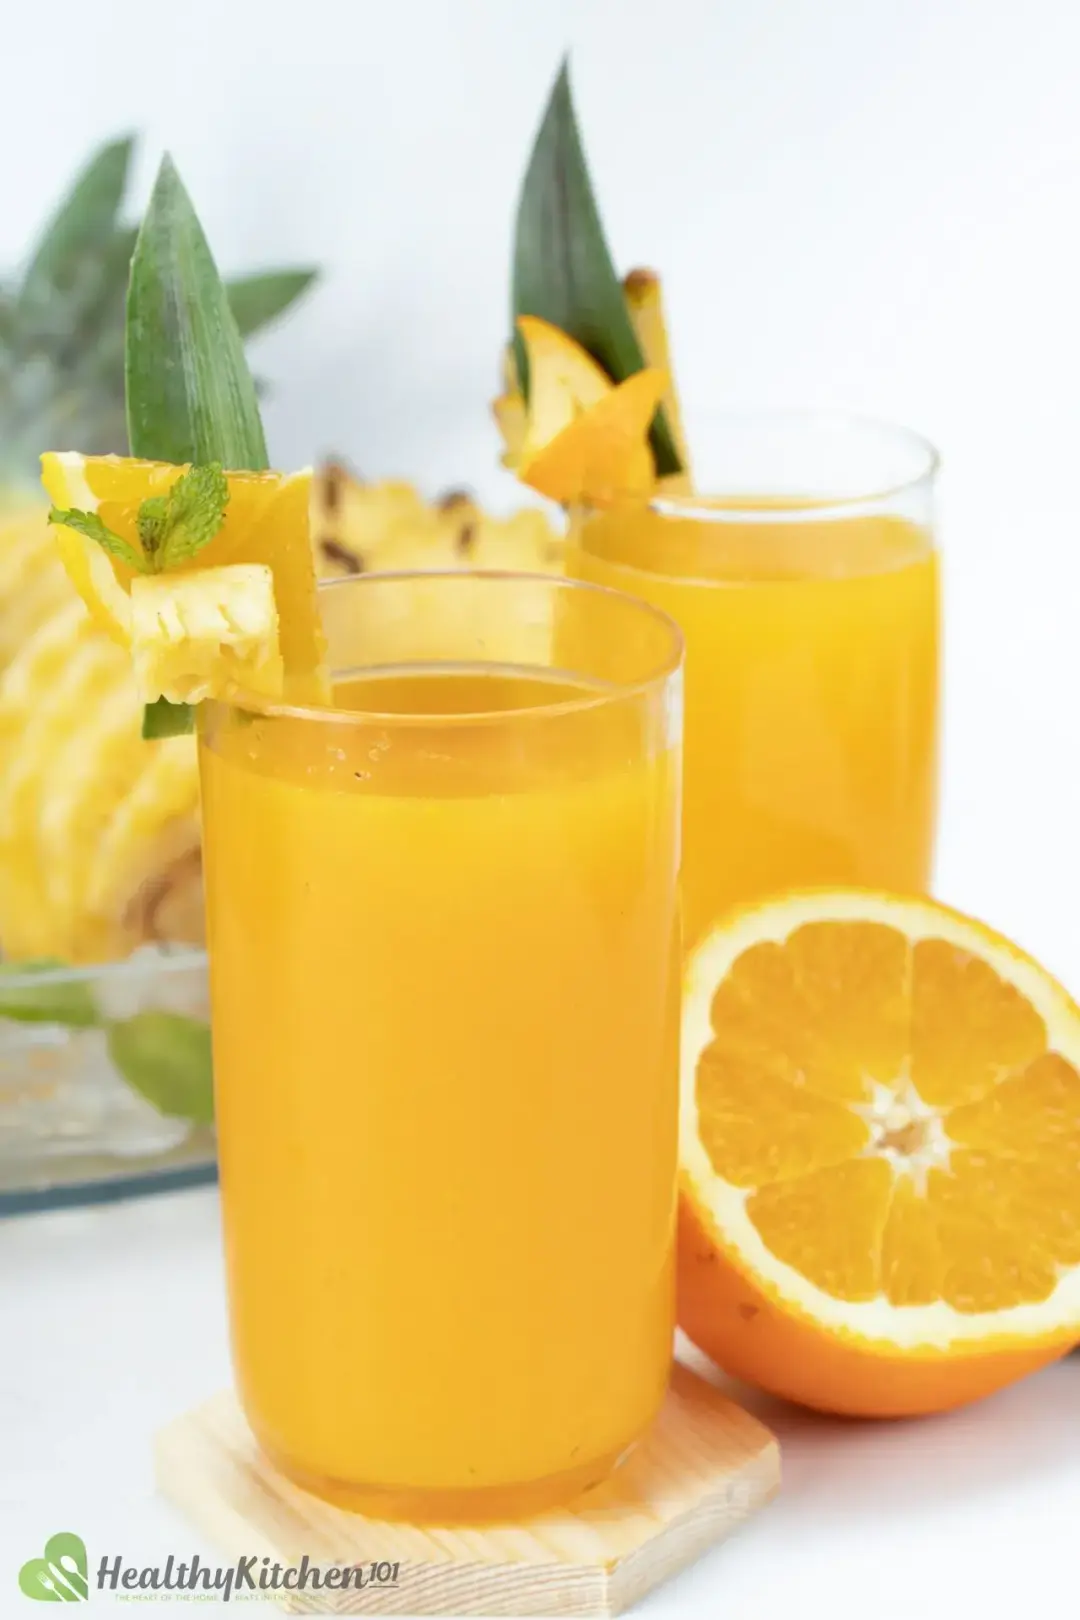 Two glases of orange pineapple juice garnished with a pineapple leaf, orange wedge, pinepple piece, next to half an orange